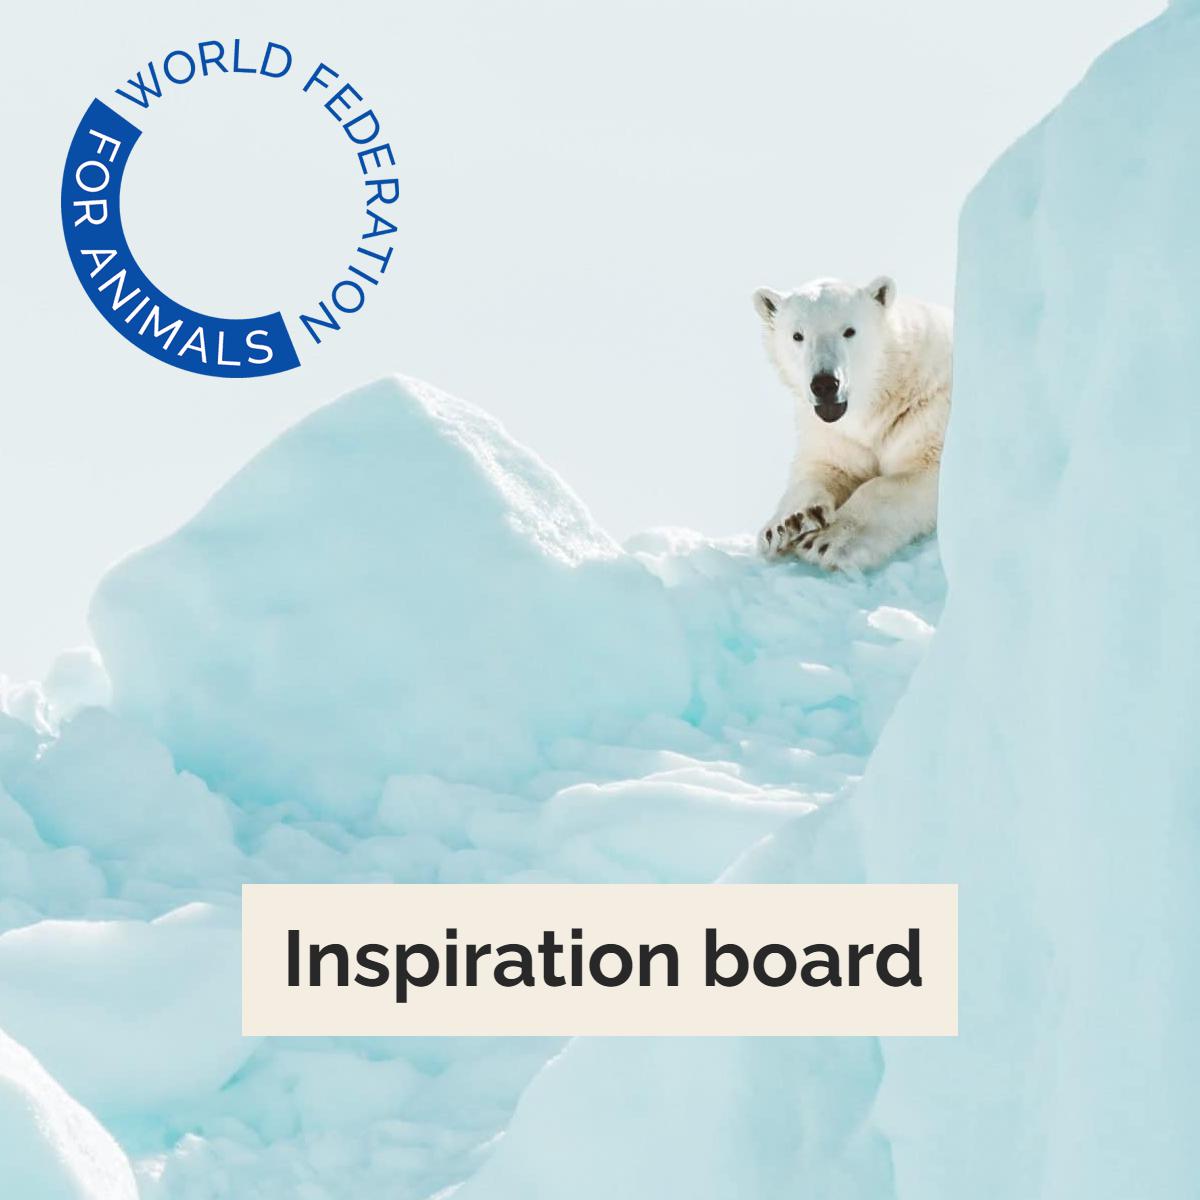 World Federation of Animals inspiration board